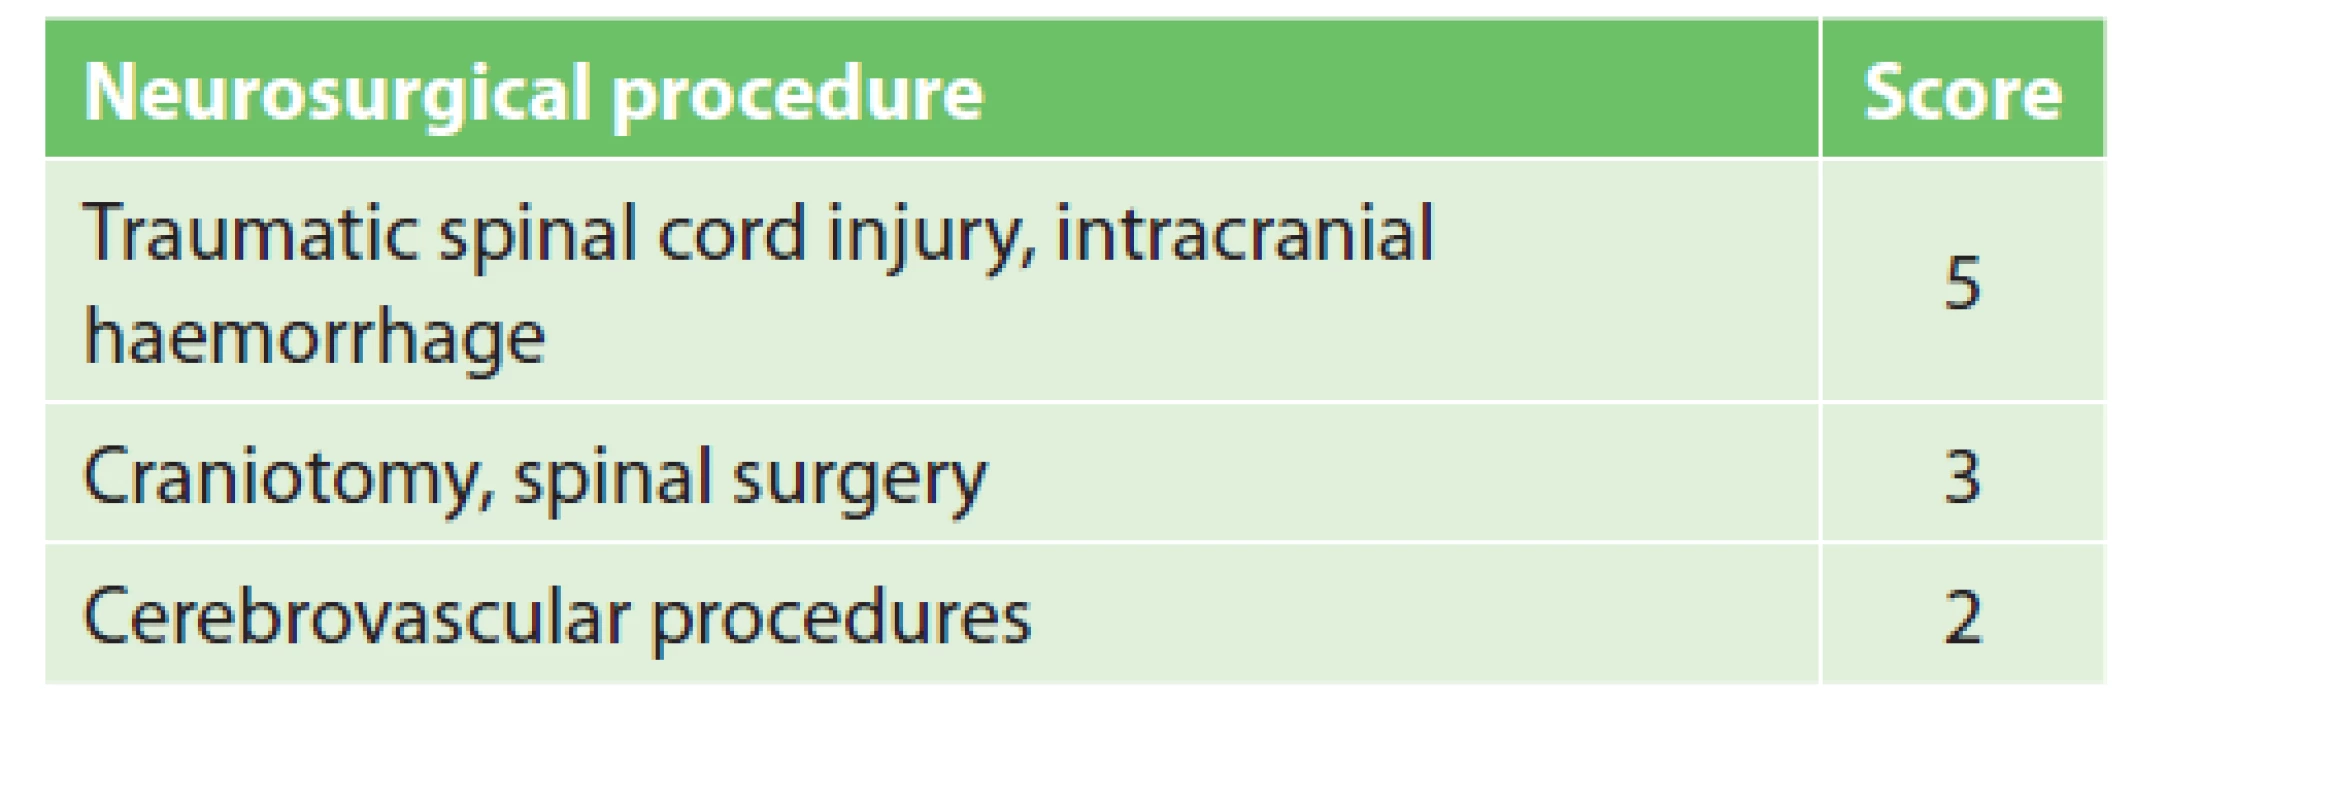 Neurosurgical procedure scoring